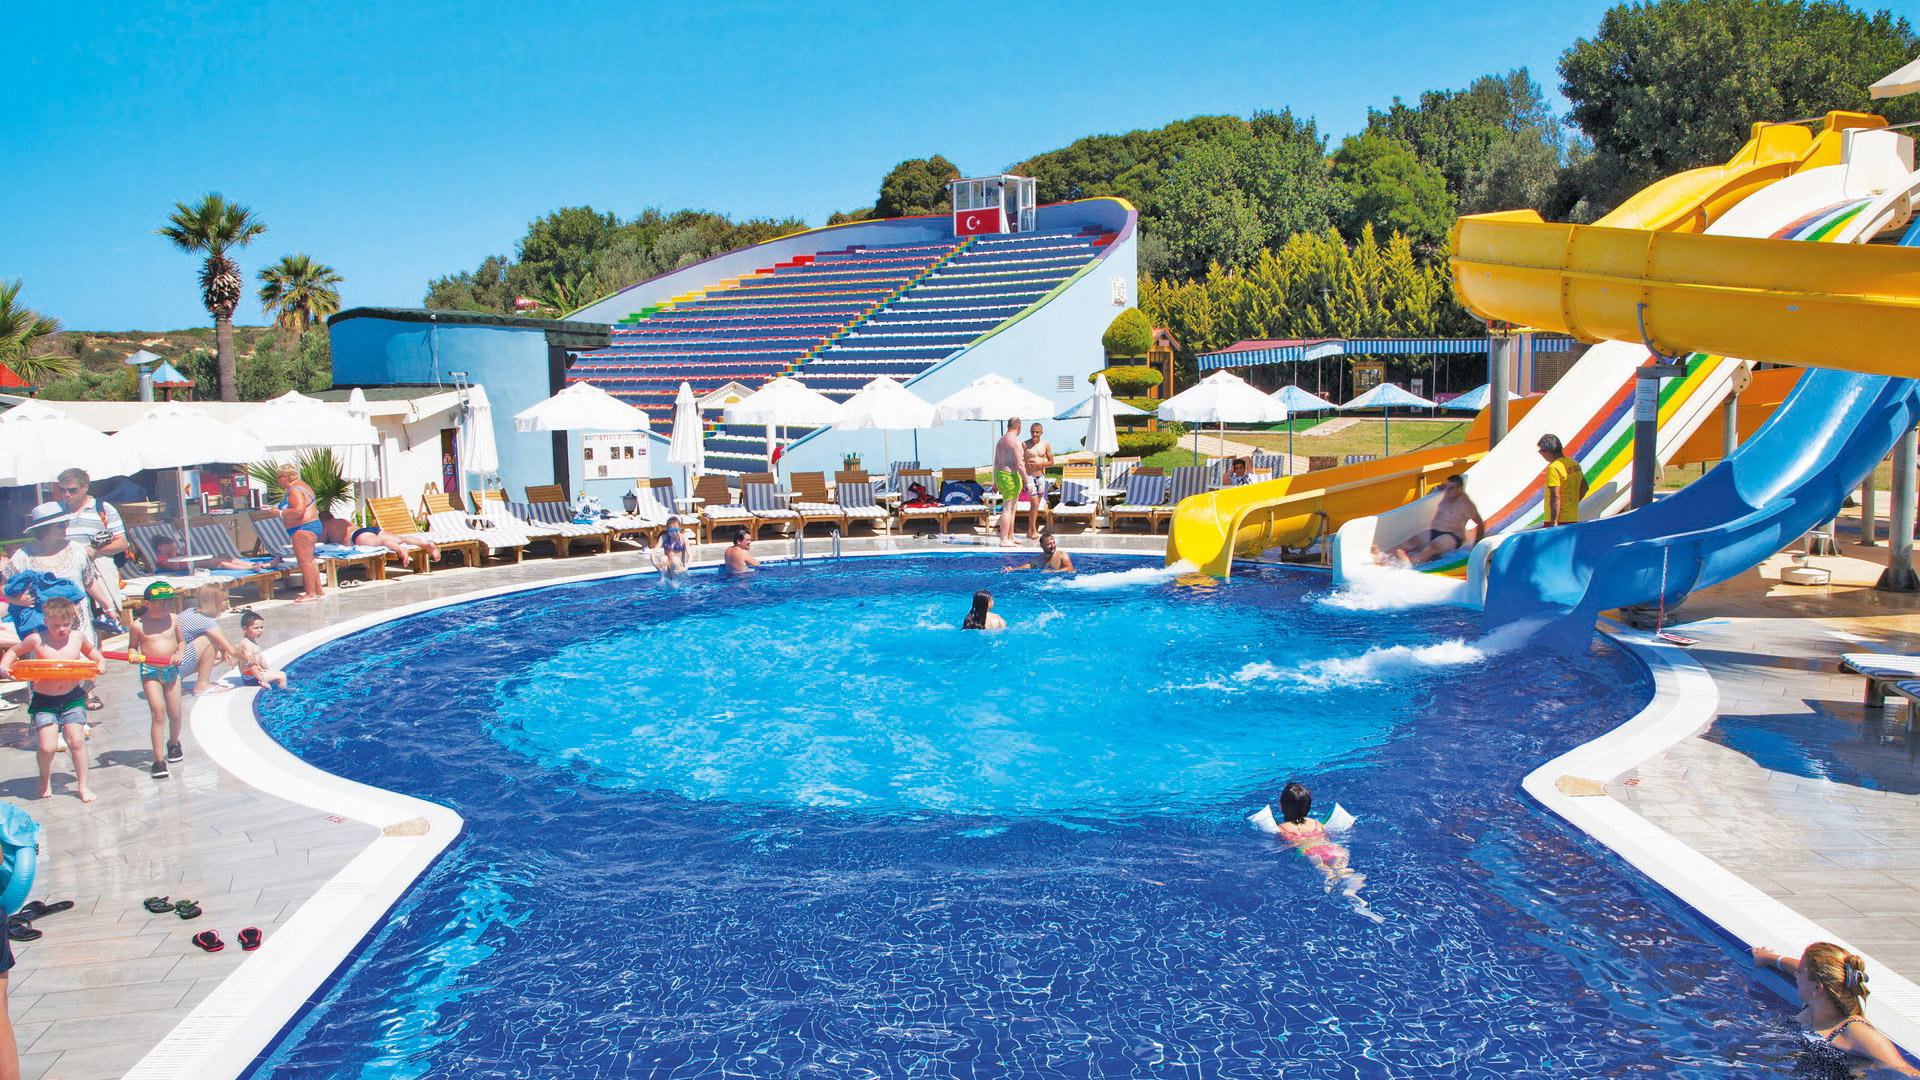 Hotel Buyuk Anadolu Didim Resort Didyma, Turkey Holidays, Reviews